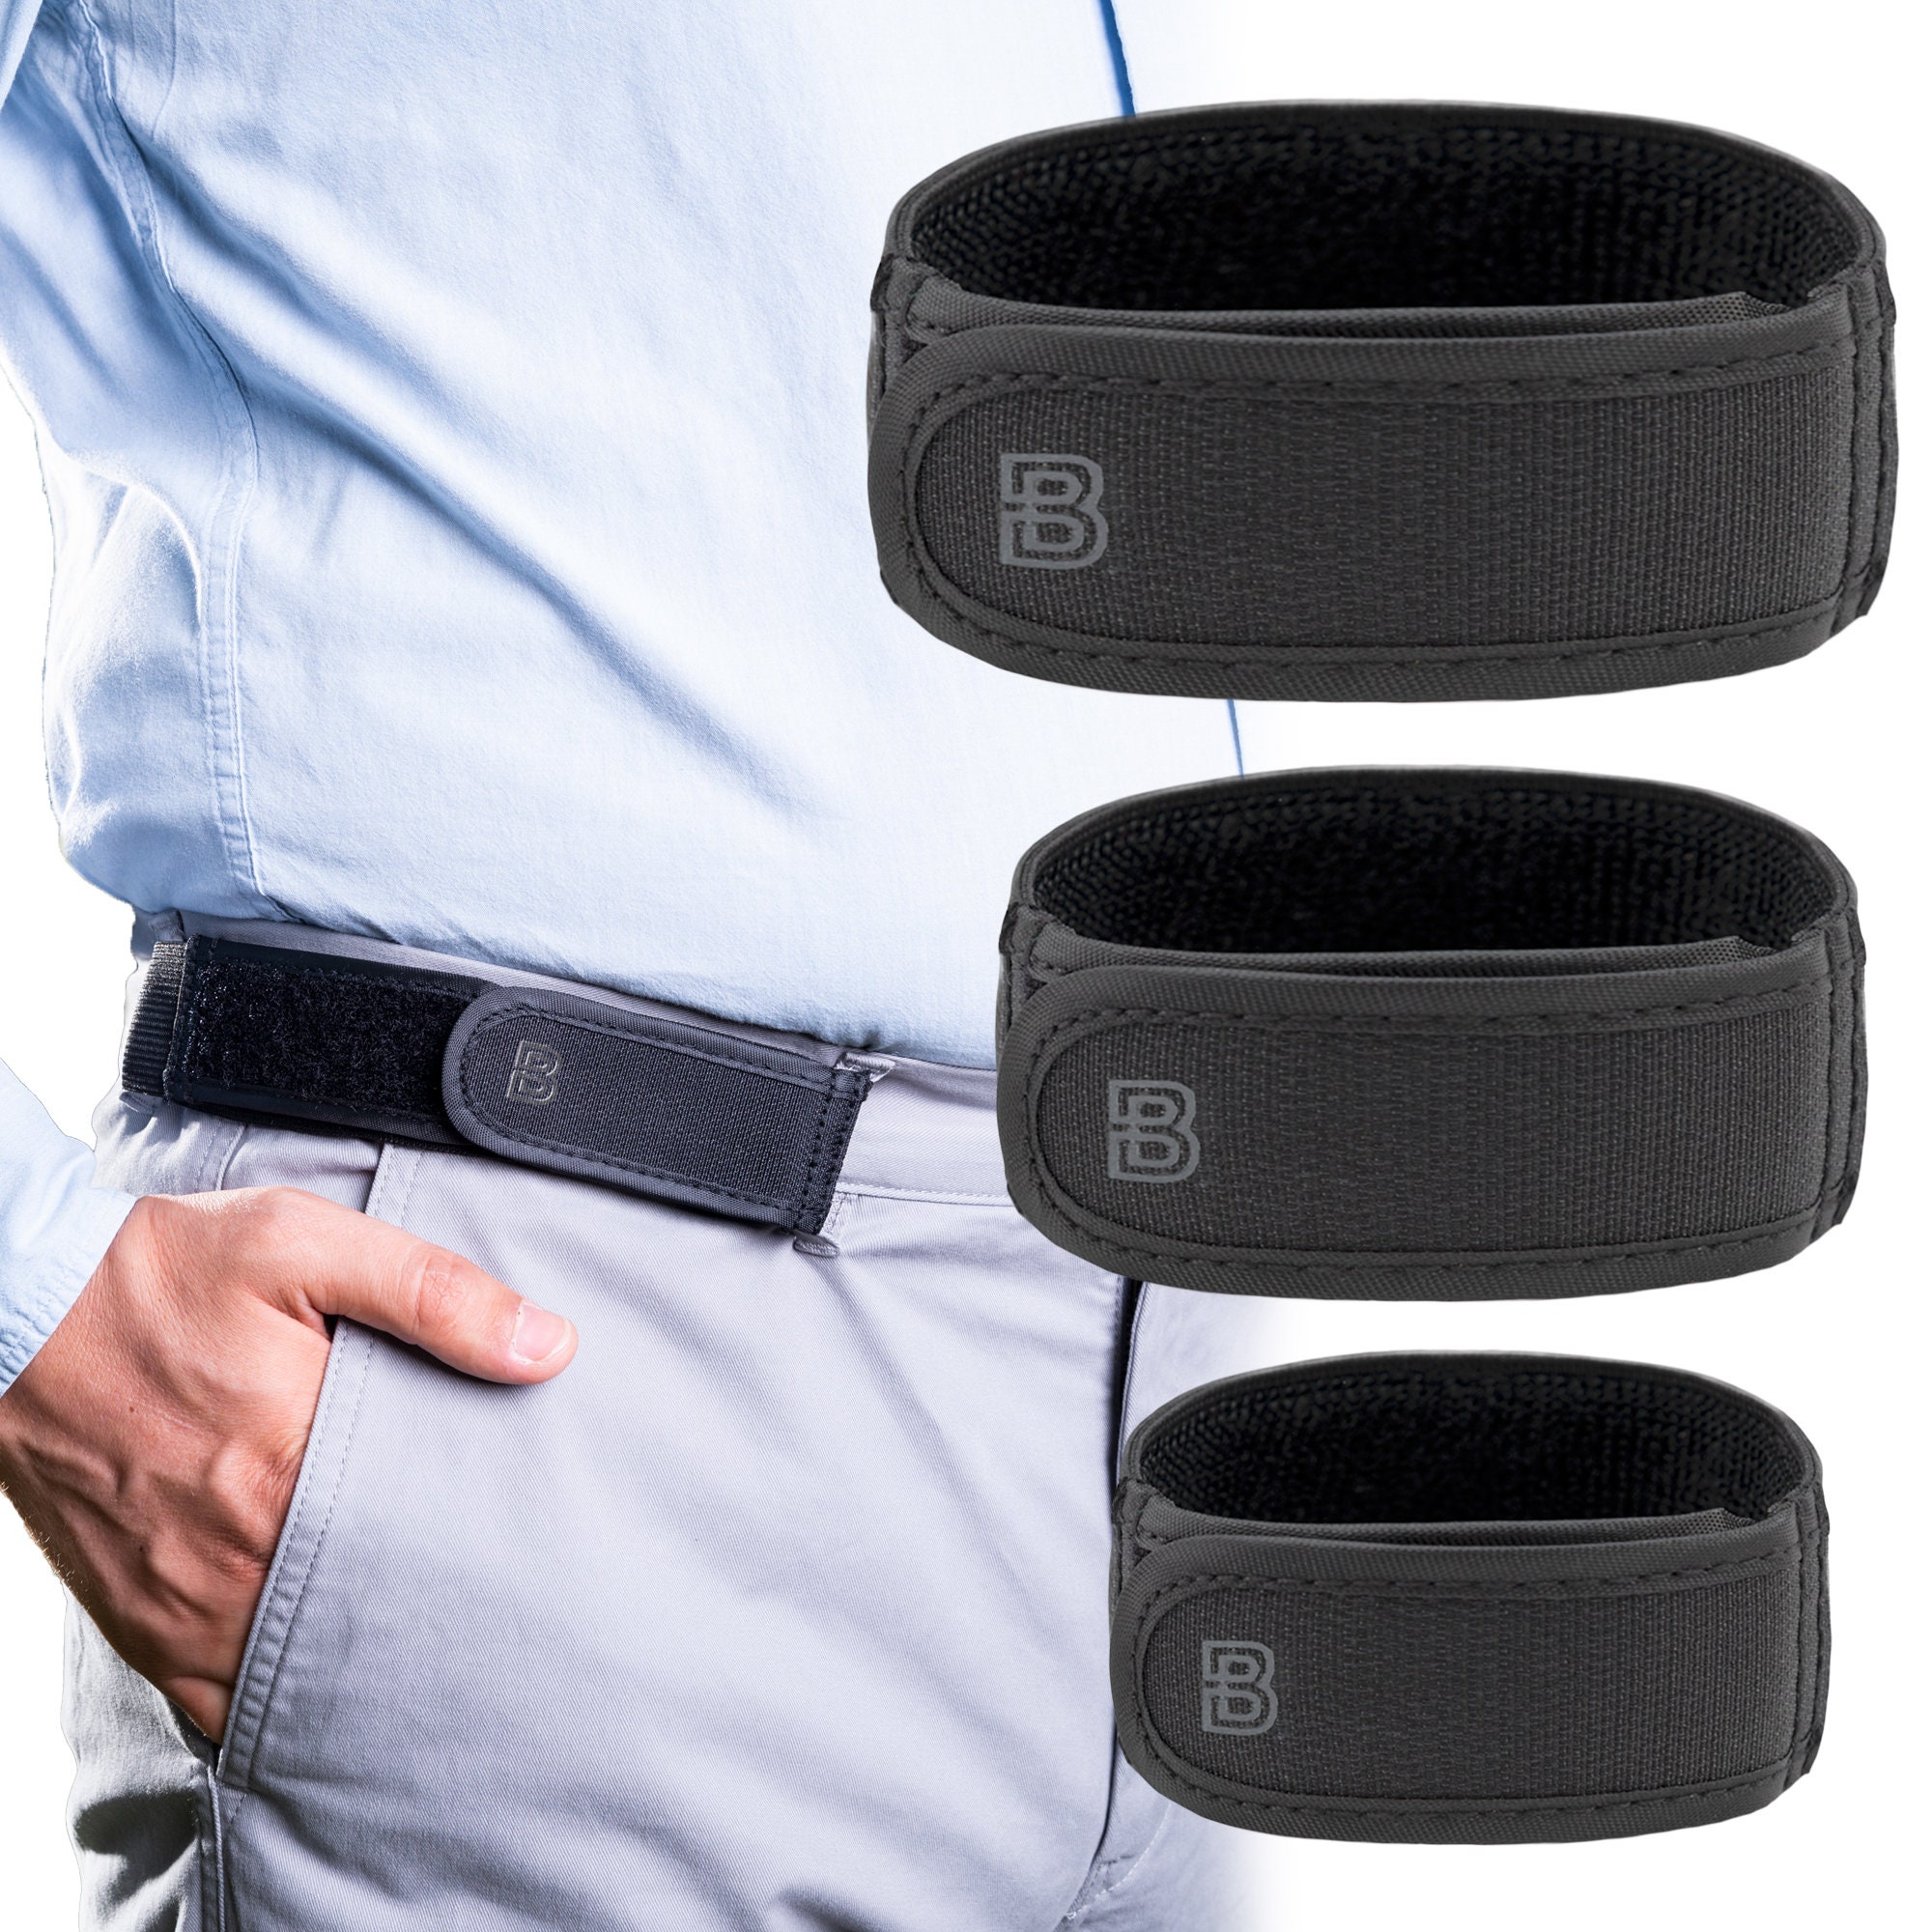 KeyUnity KS02 EDC Belt Keychain Clip Quick Release Stainless Steel Duty  Belt Key Ring Holder for Pants Jeans Trousers  Walmartcom